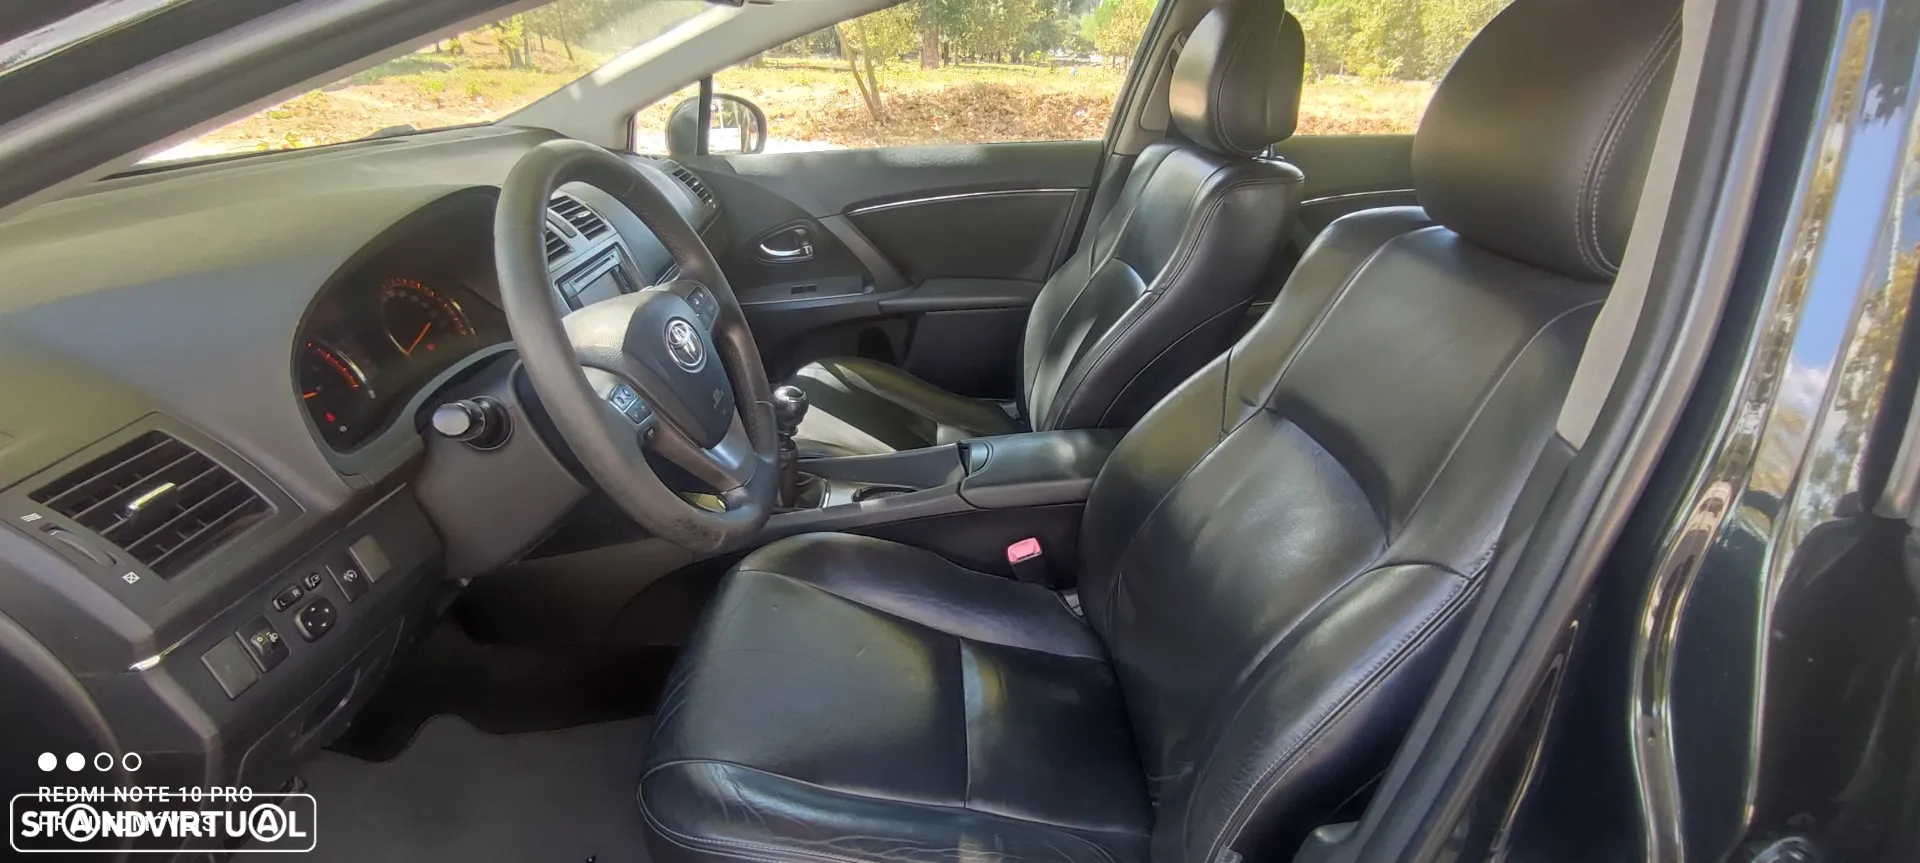 Toyota Avensis SW 2.0 D-4D Exclusive +Pele+GPS - 21